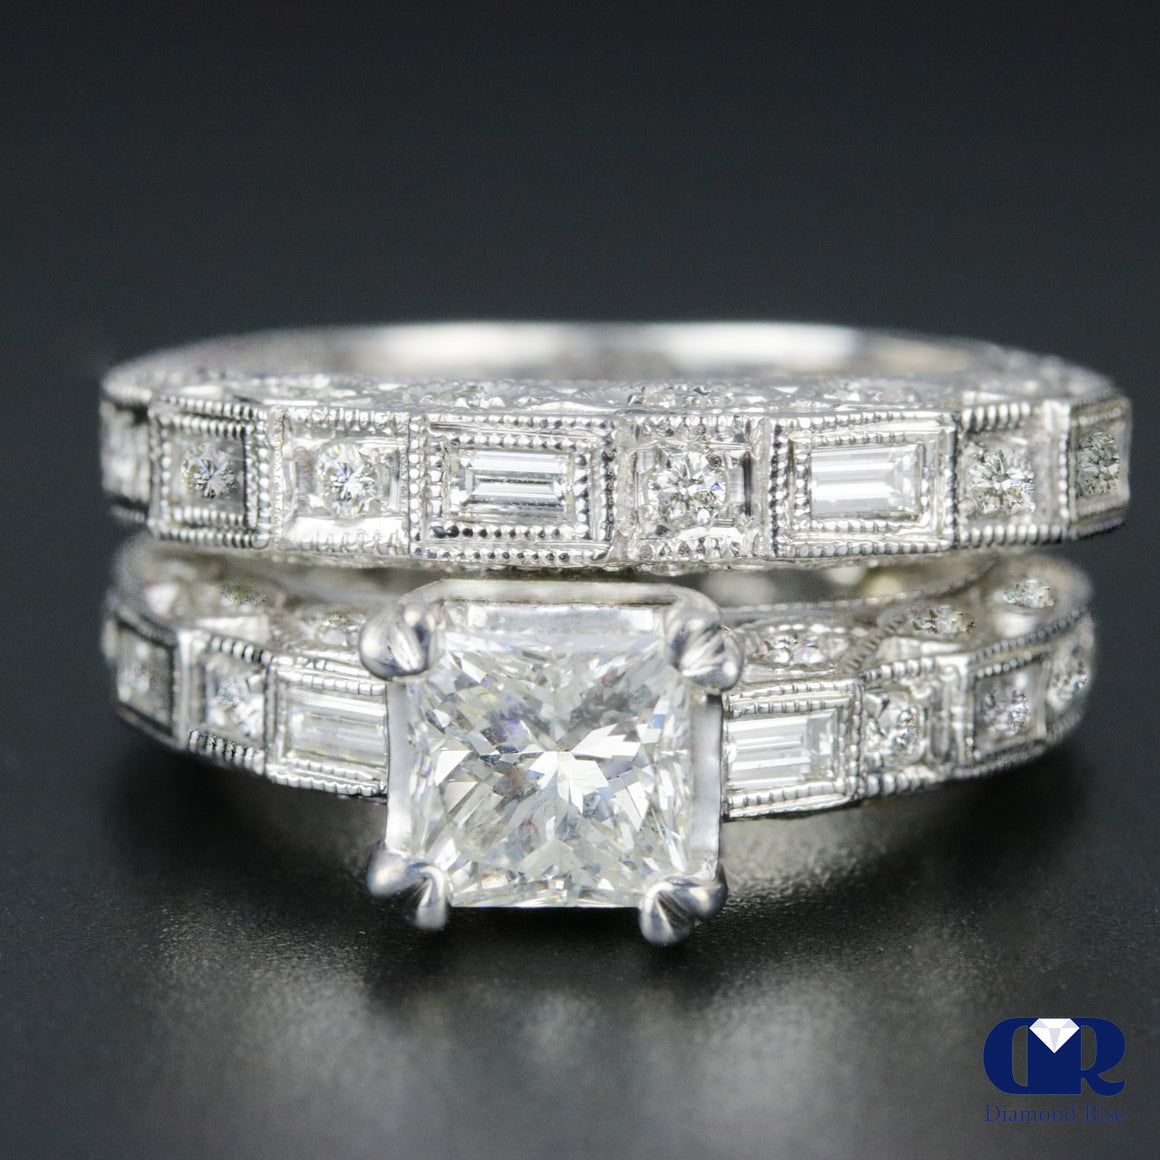 3.25 Carat Princess Cut Diamond Engagement Ring Set In 14K White Gold - Diamond Rise Jewelry